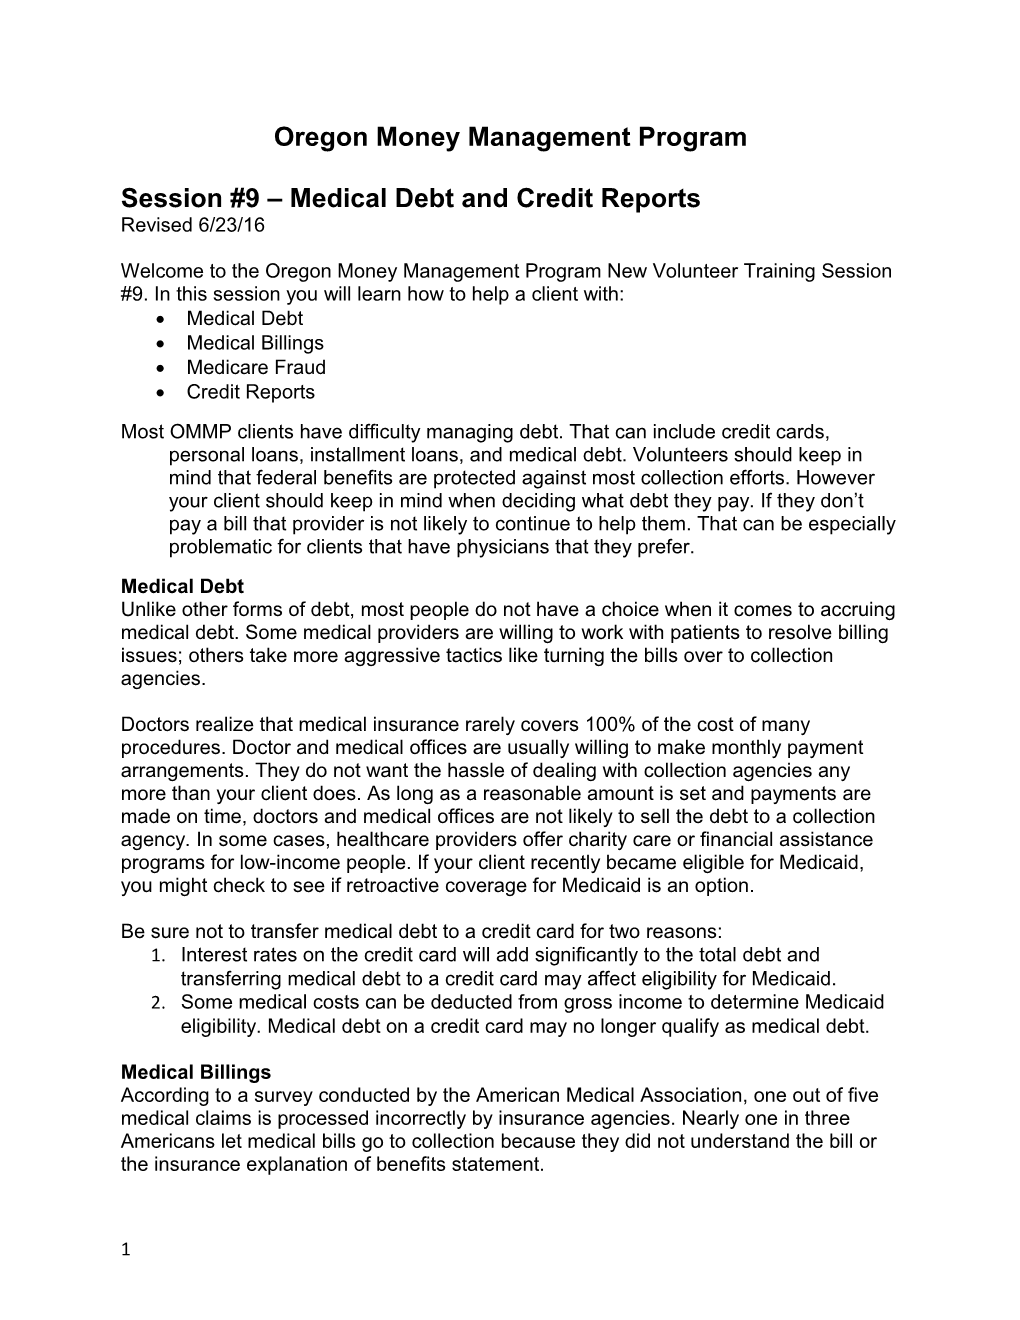 Session 9 - Medical Debt Credit Reports